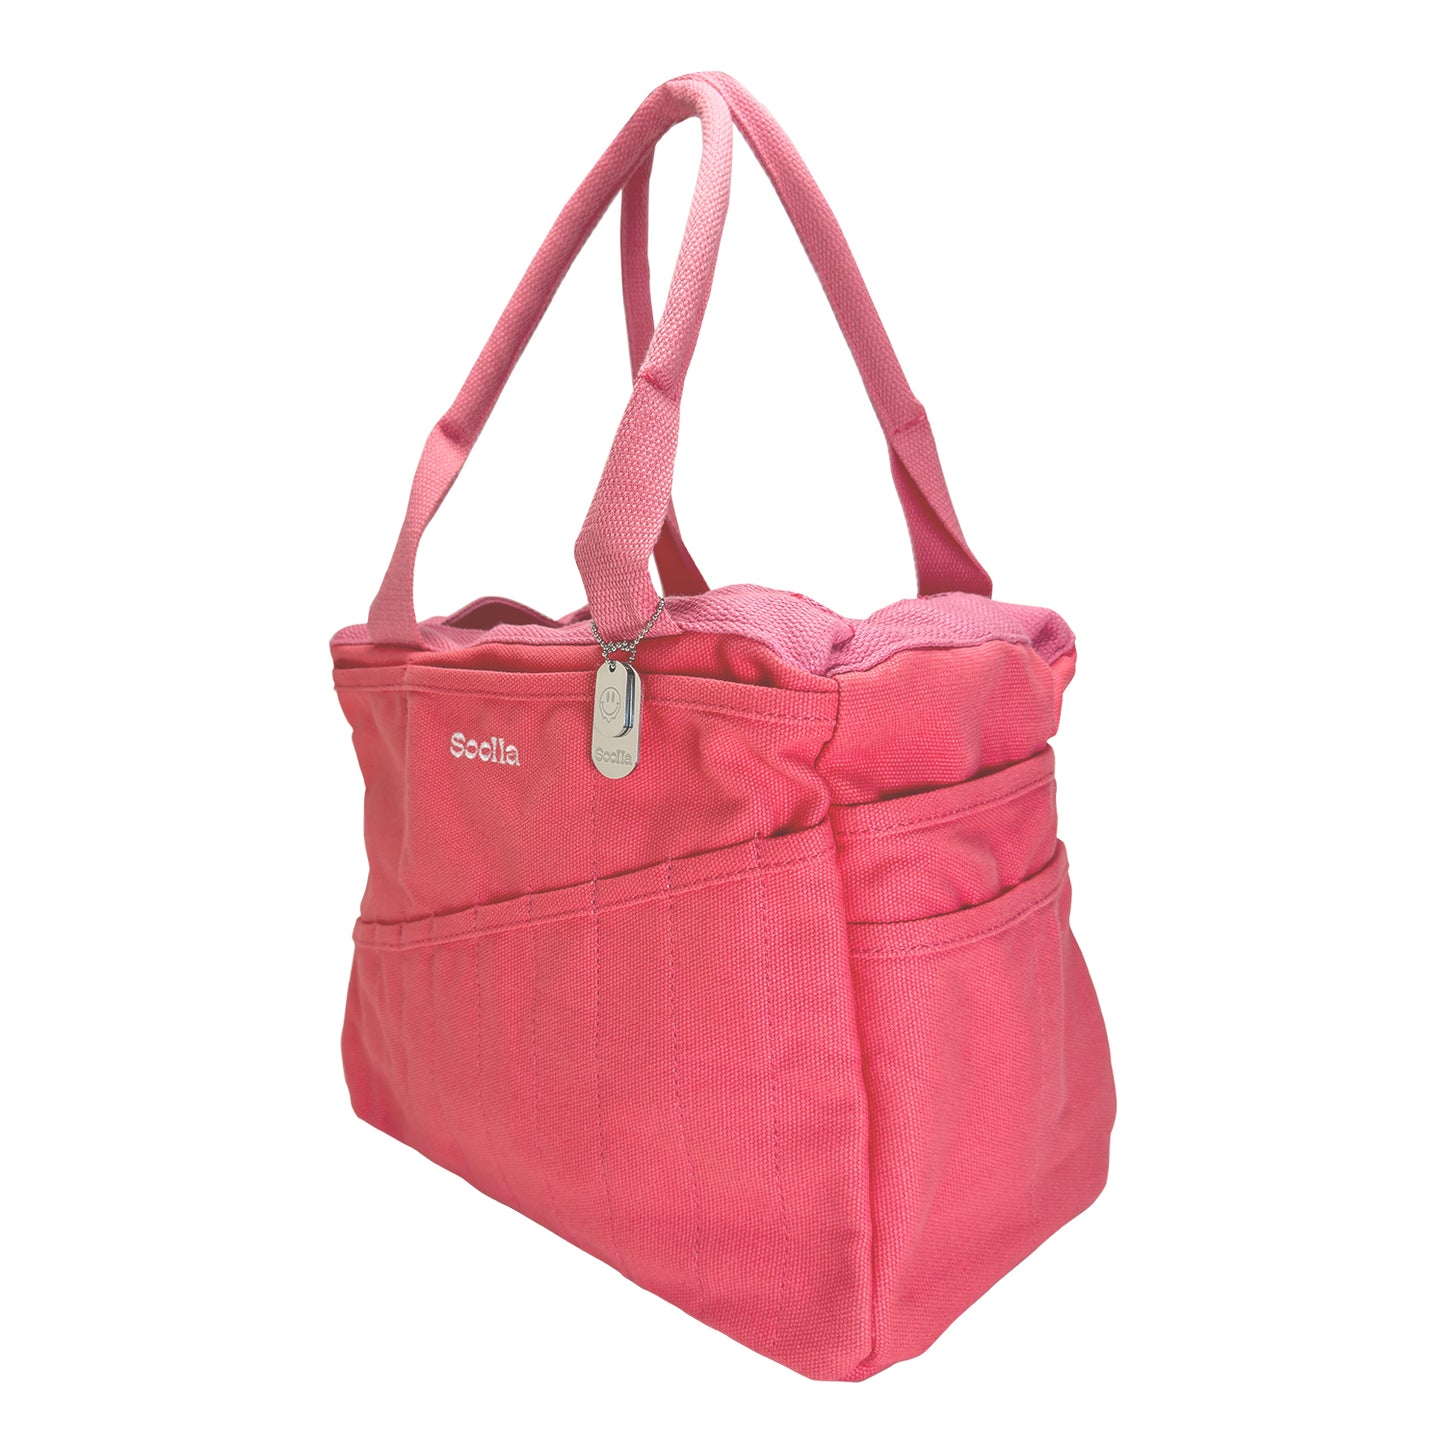 Soolla Studio Art Supply Bag - Pink Lemonade